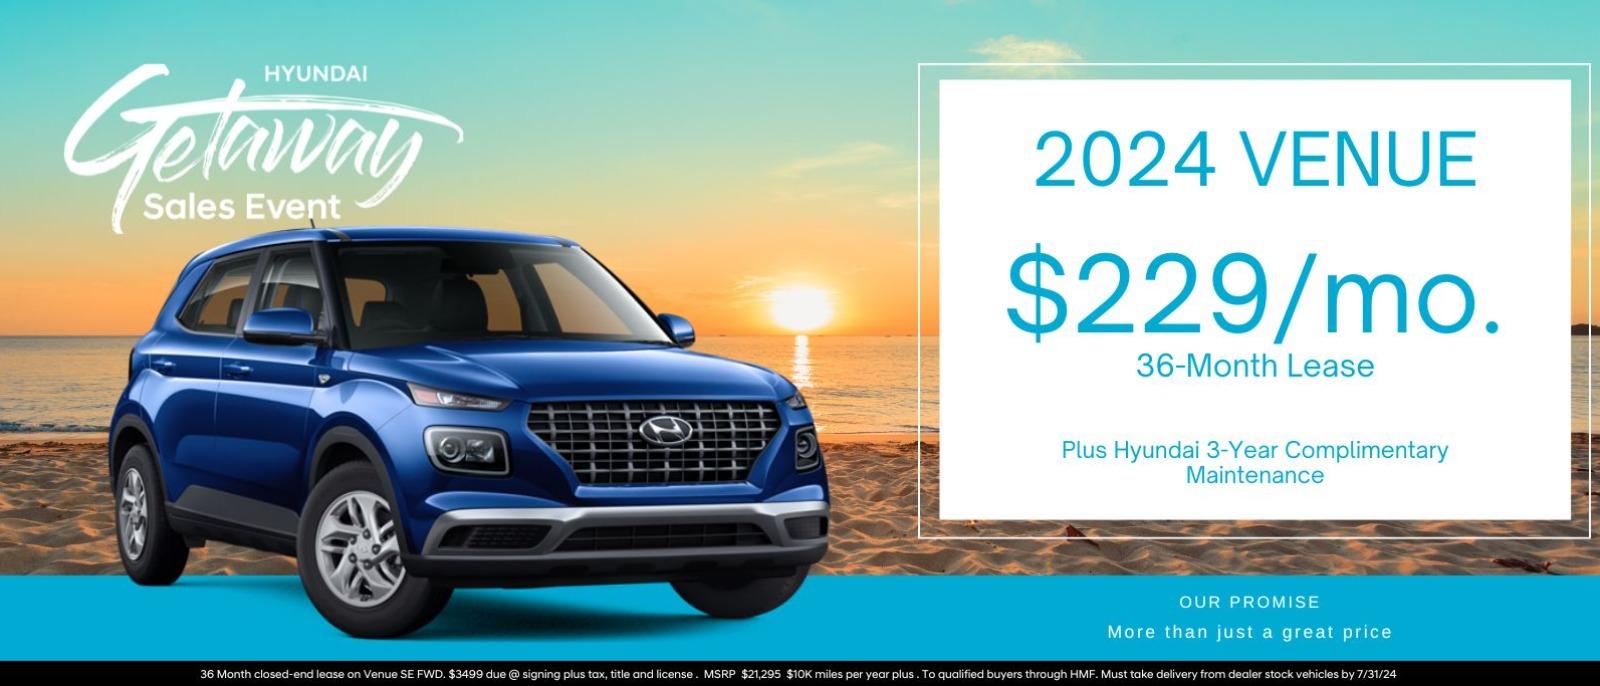 2024 Venue 
$229/mo. 36-Month 
Plus Hyundai 3-Year Complimentary Maintenance